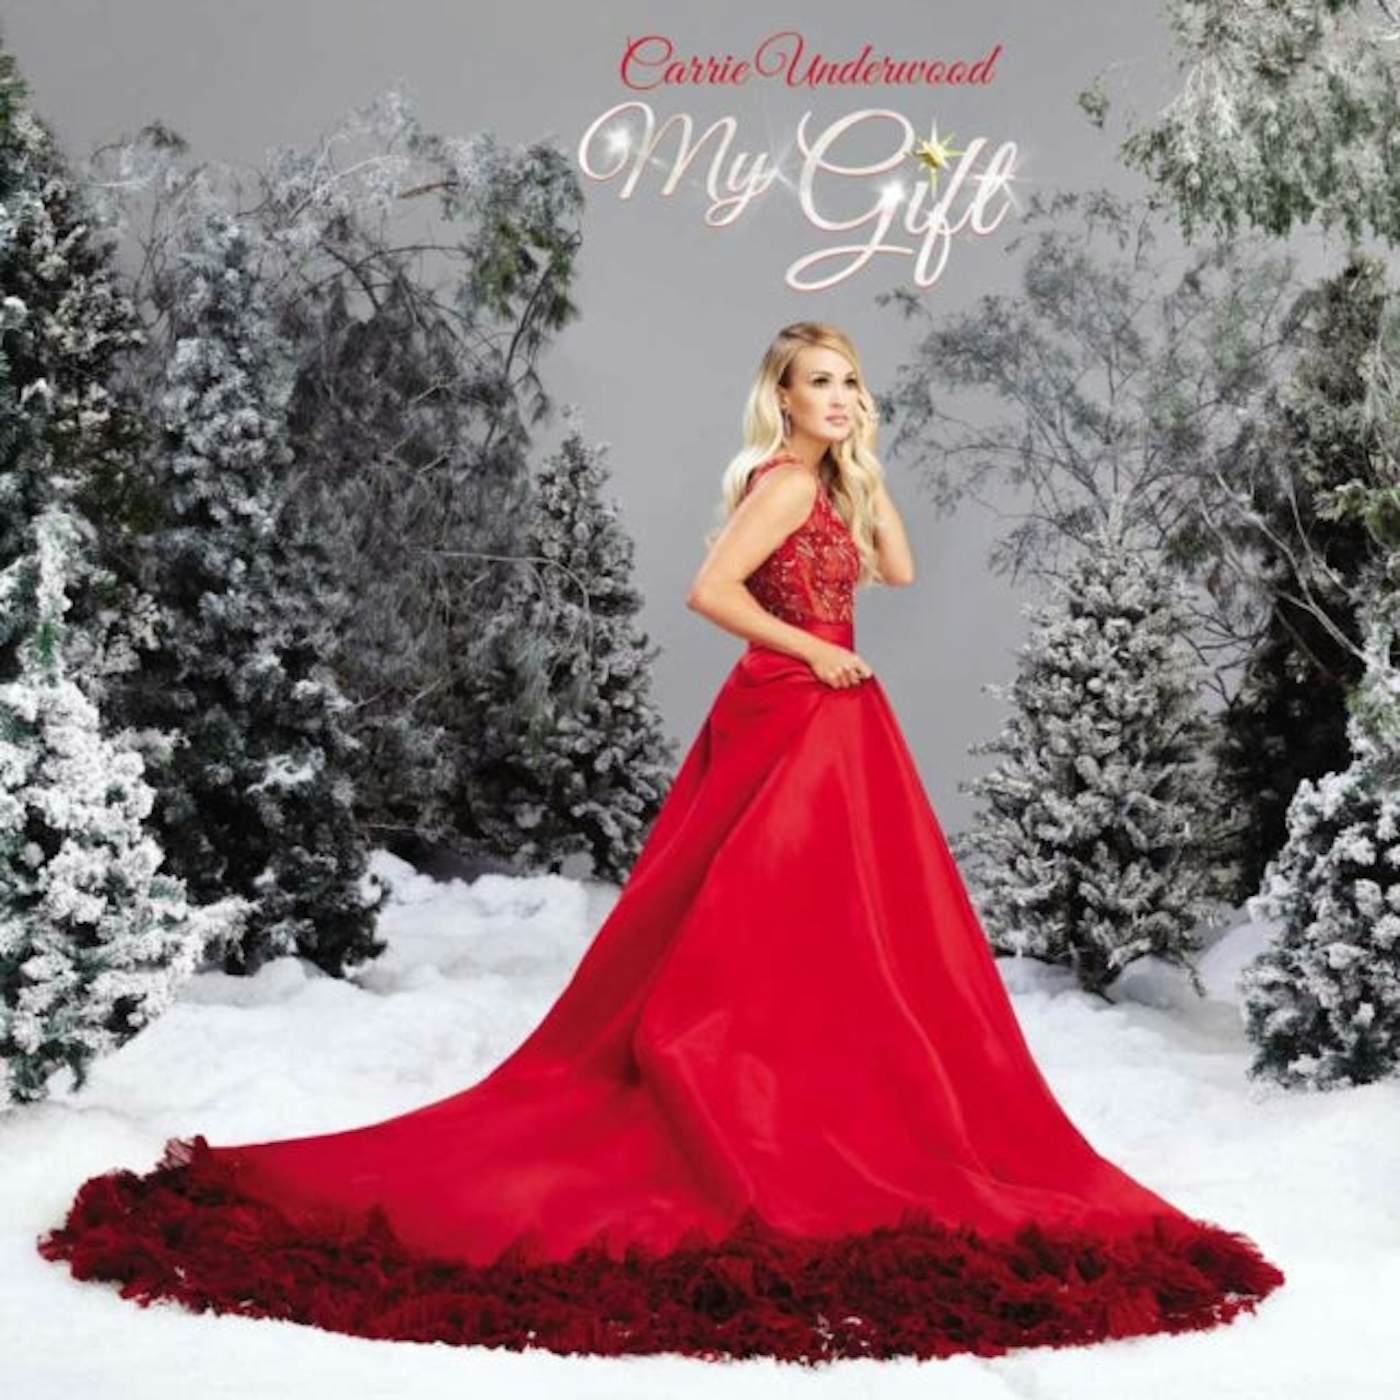 Carrie Underwood LP Vinyl Record - My Gift (Red Vinyl)